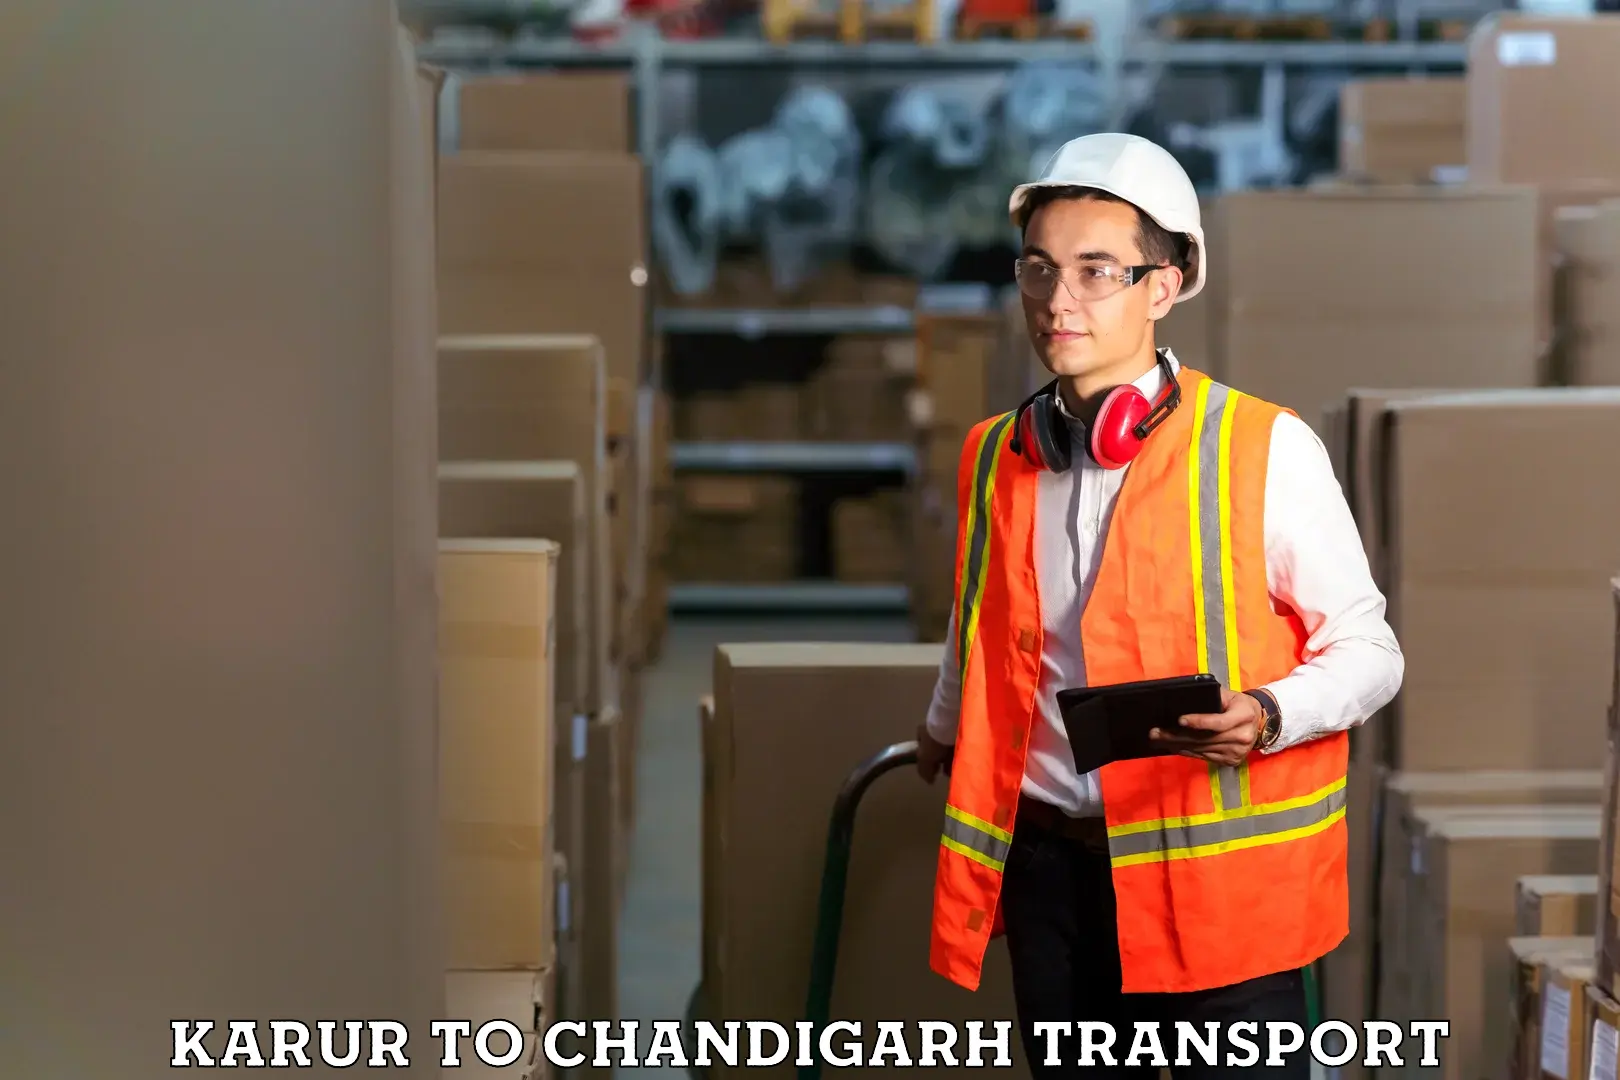 Shipping partner Karur to Chandigarh